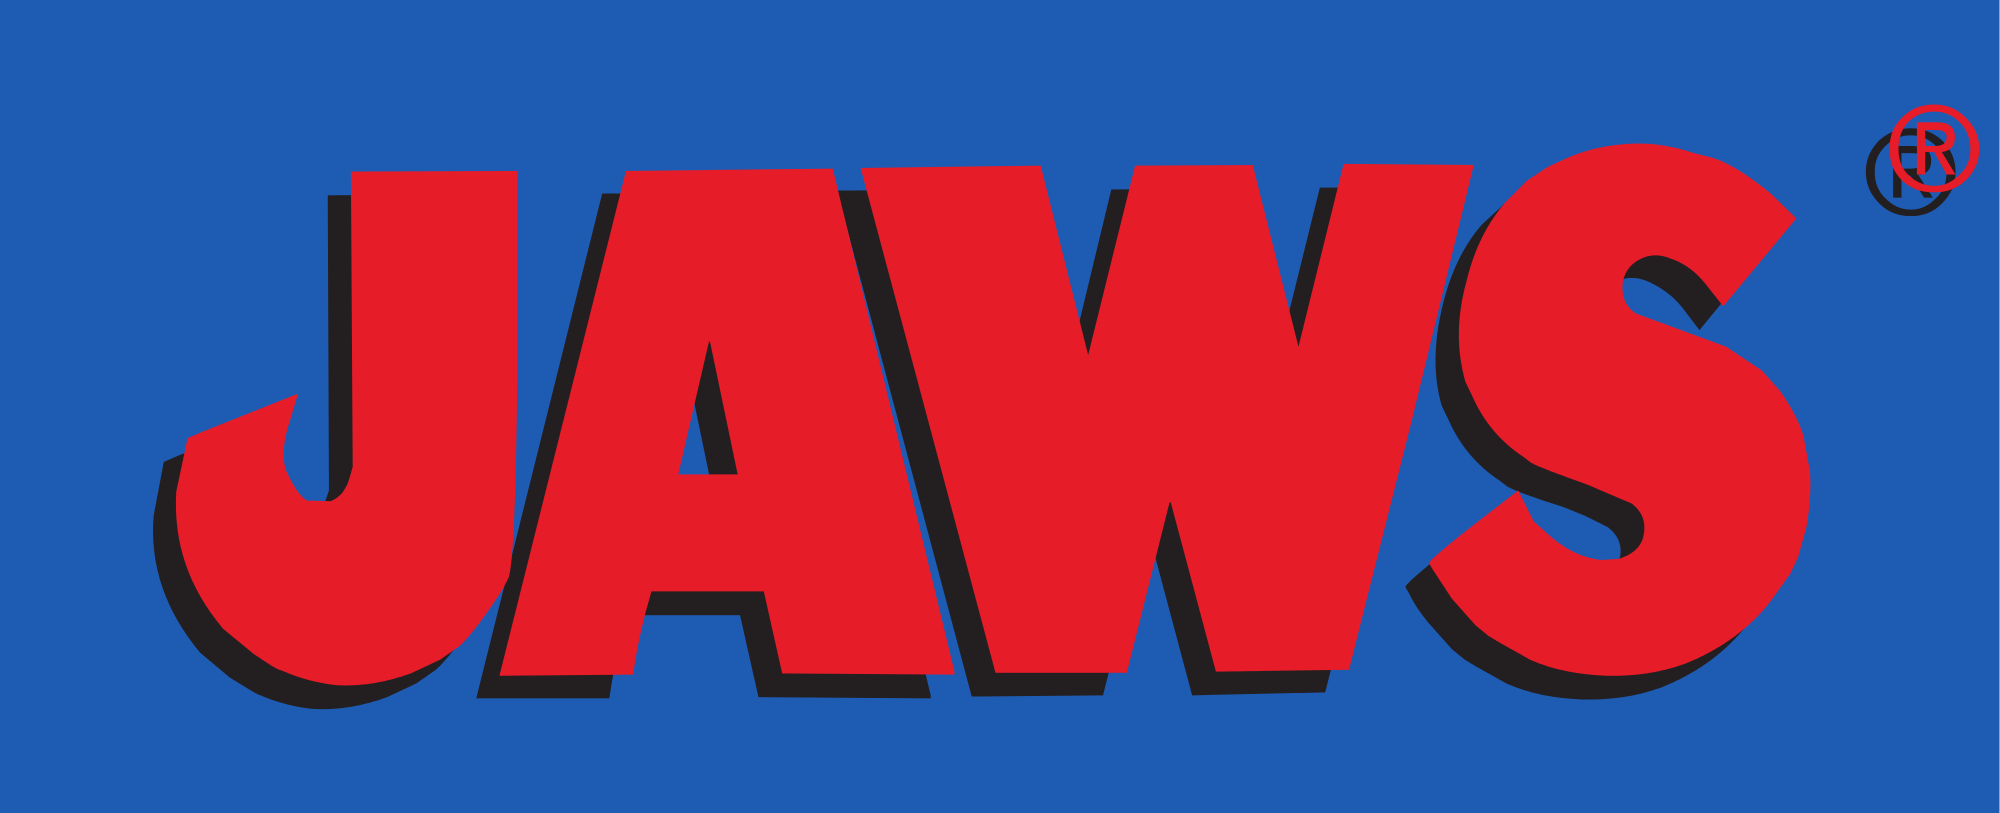 Jaws Logo - File:Jaws-logo.svg - Wikimedia Commons